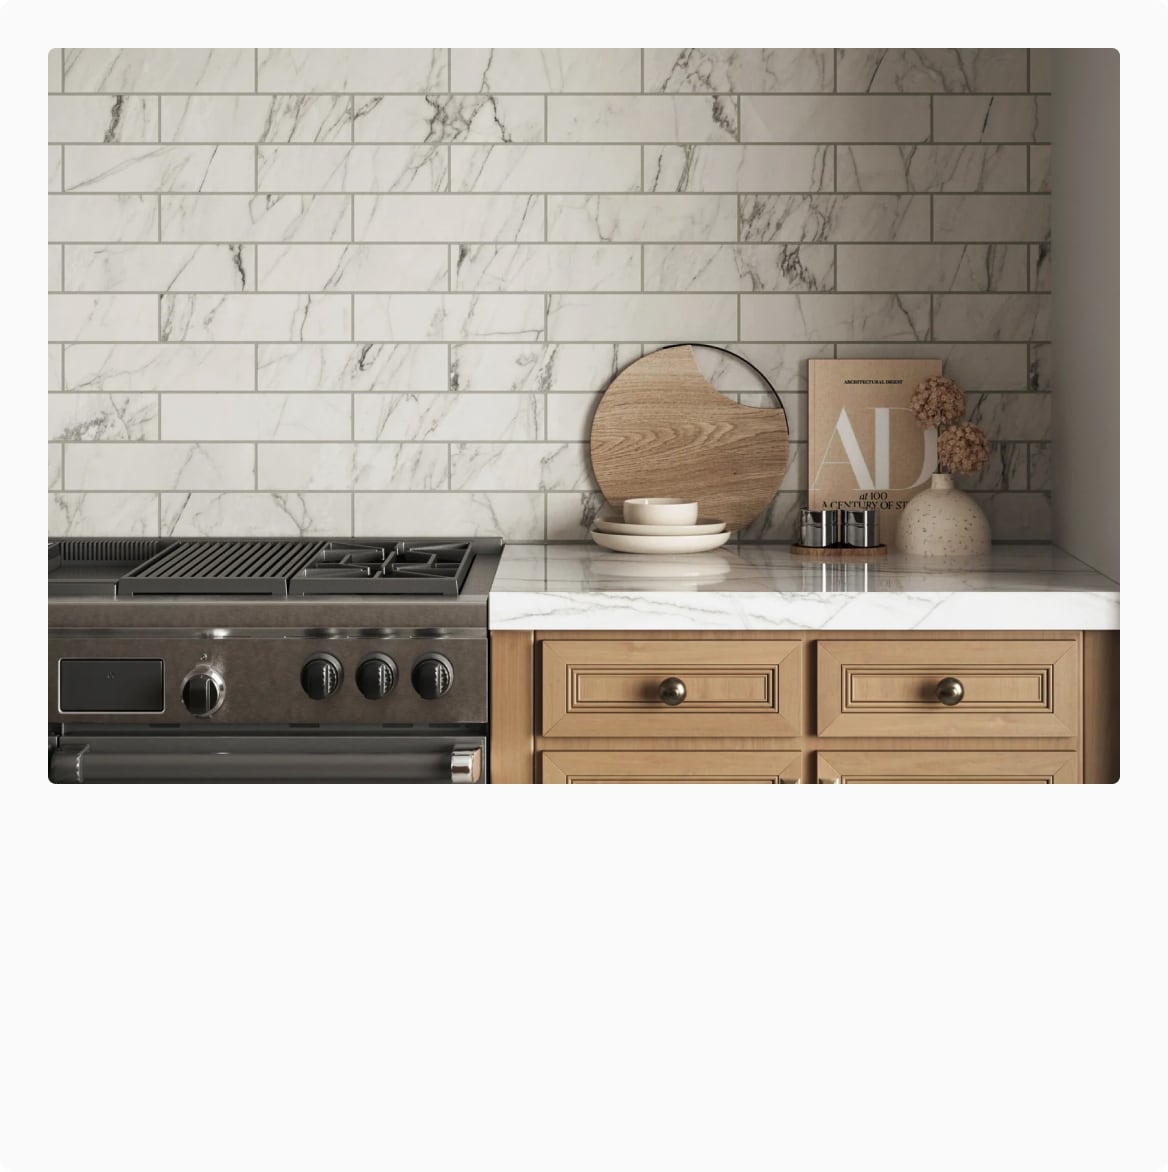 Classic Subway Tile backsplash brings timeless elegance to modern kitchens, enhancing style and sophistication.